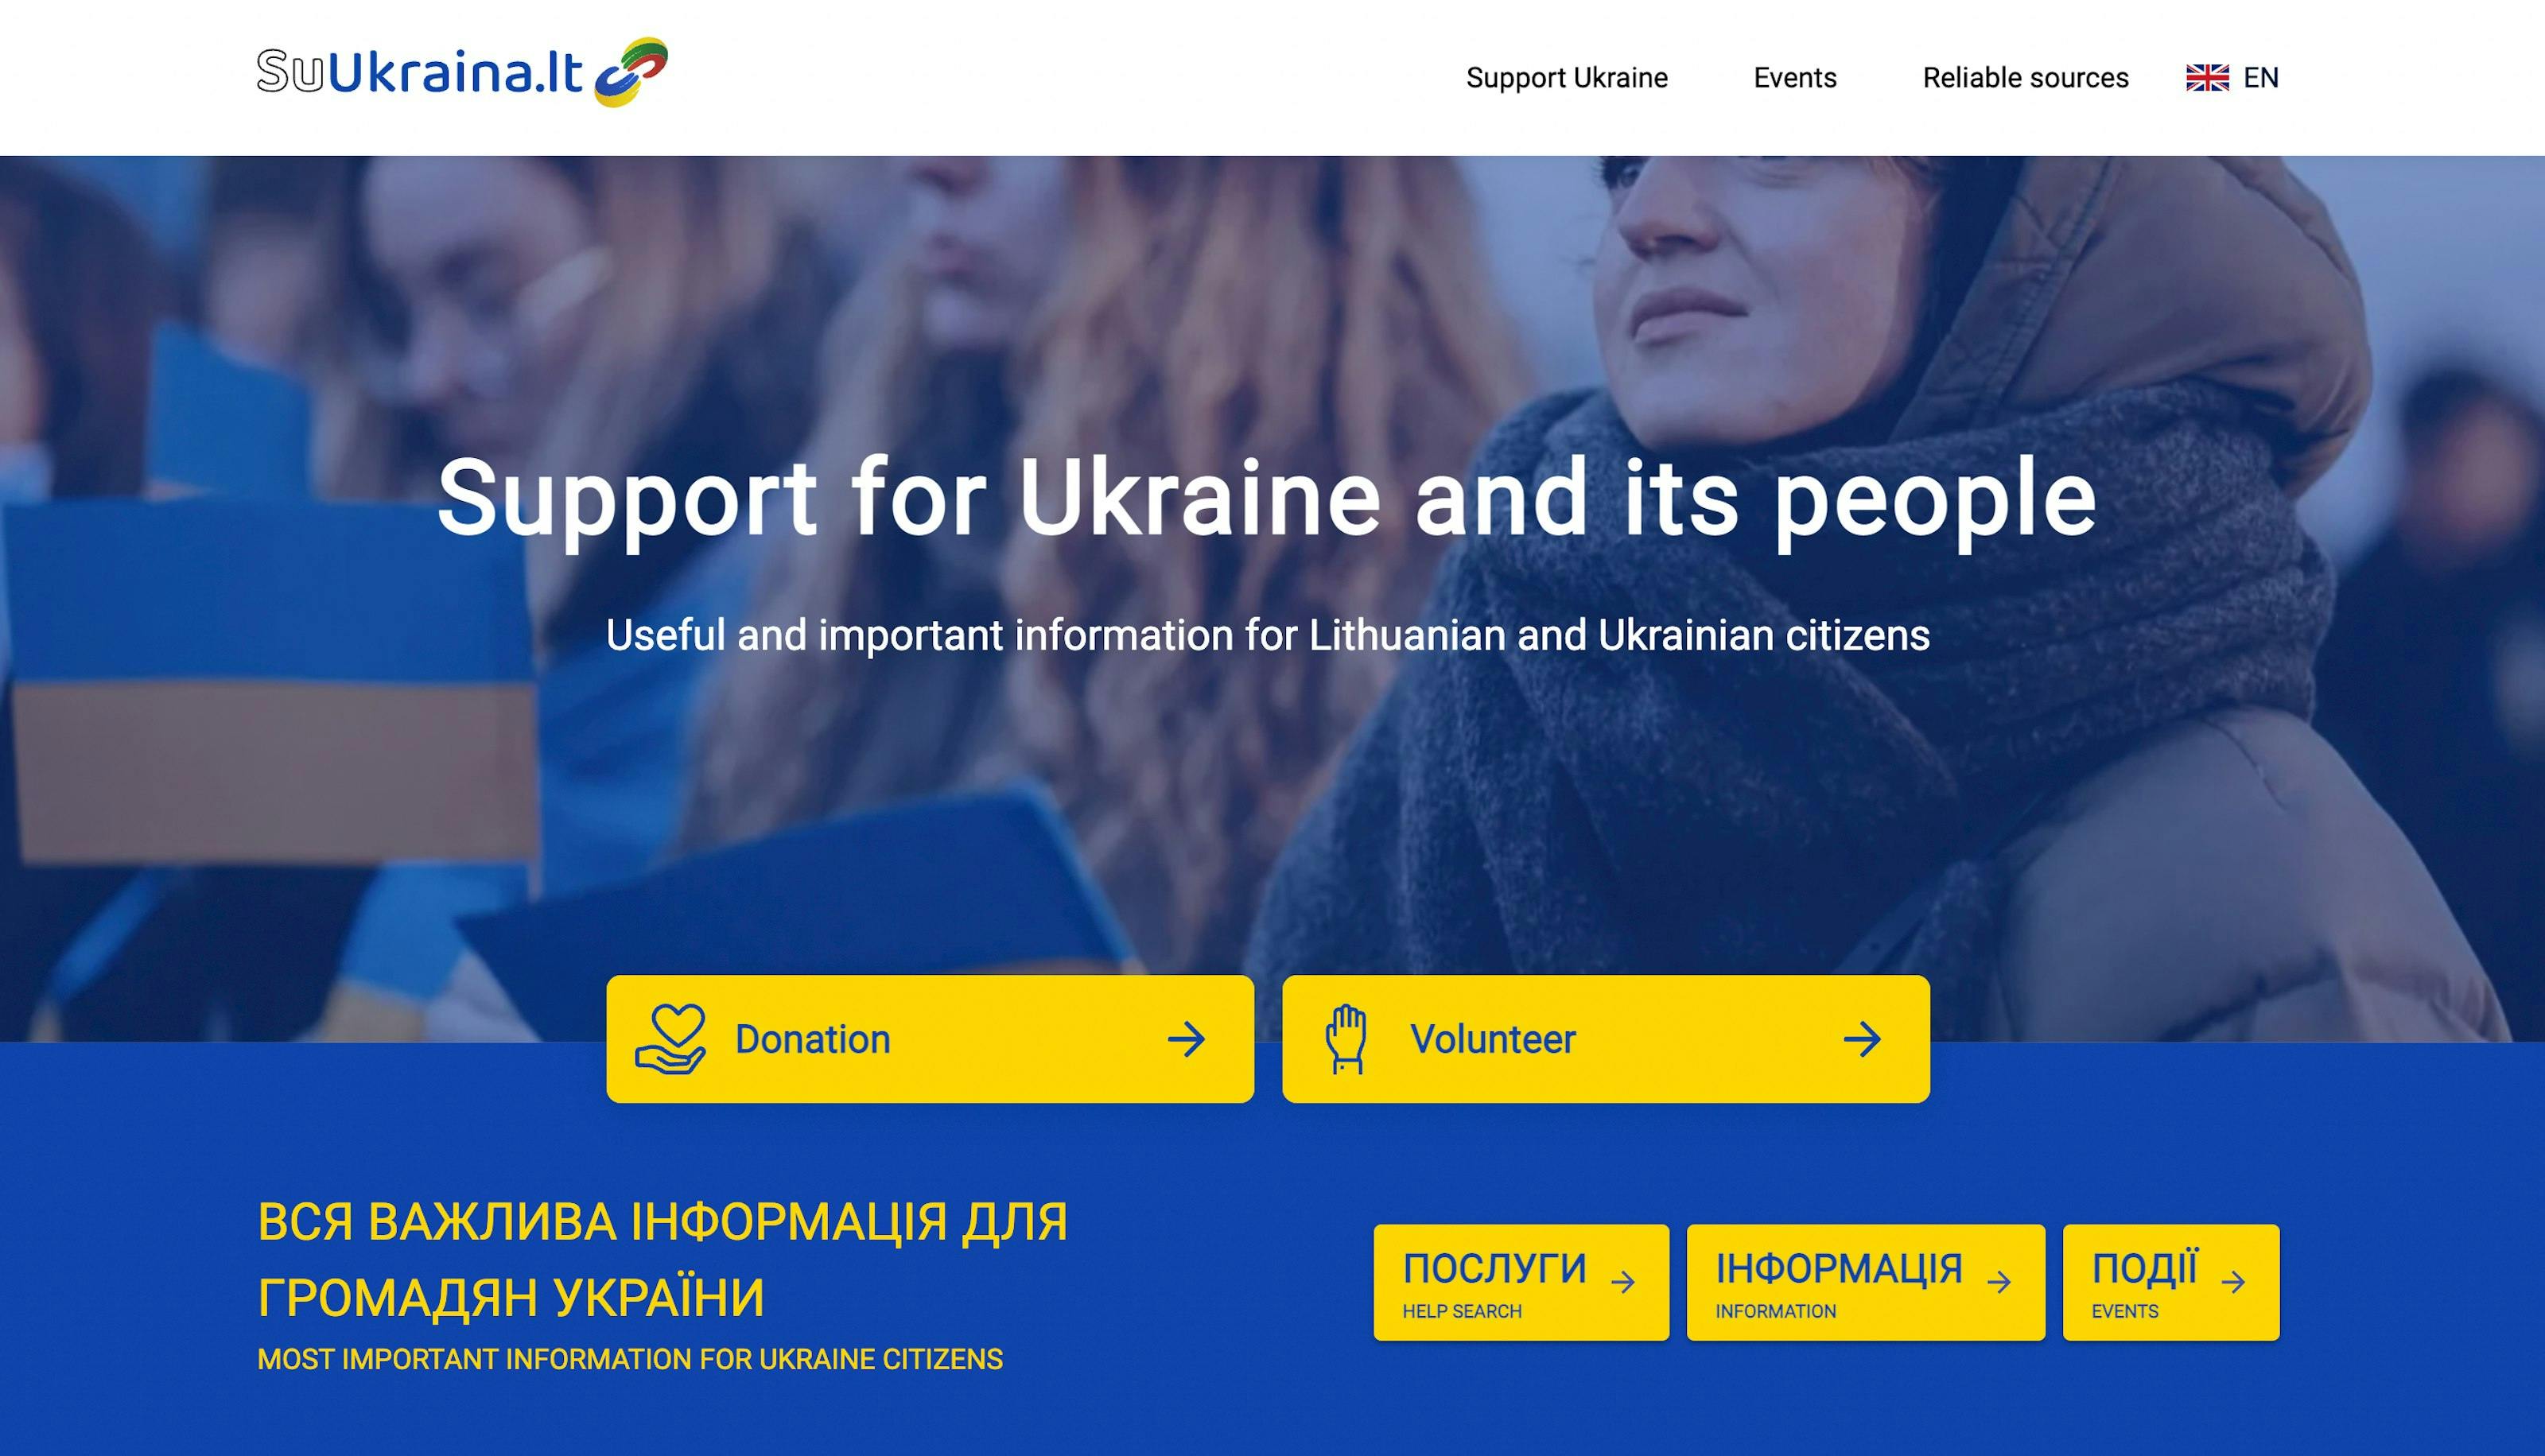 the homepage of suUkraina.lt